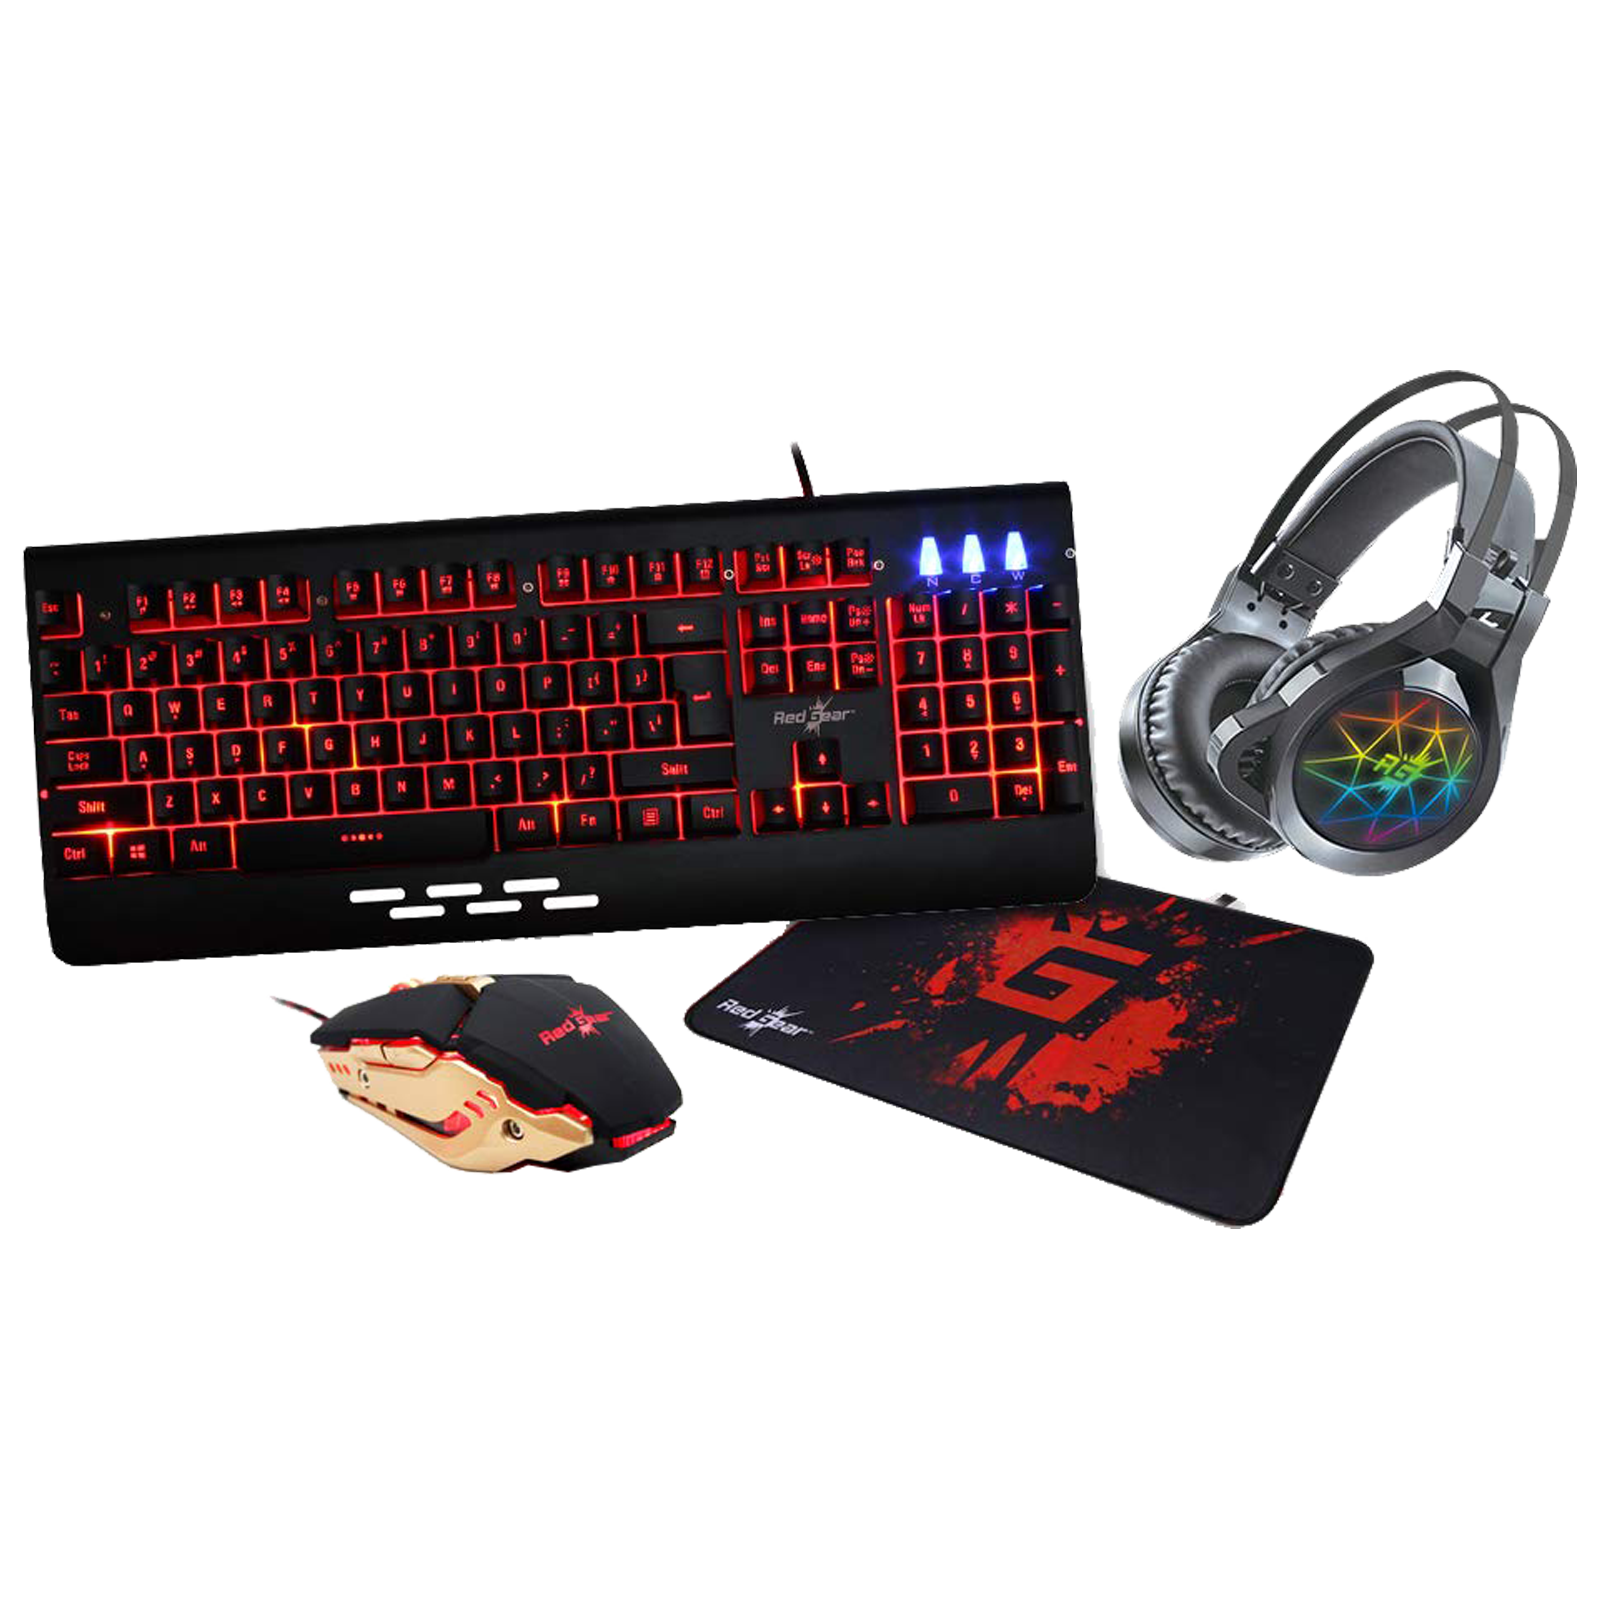 Redgear Manta MT41 Gaming Keyboard And Mouse Combo (RGB LED, Black)